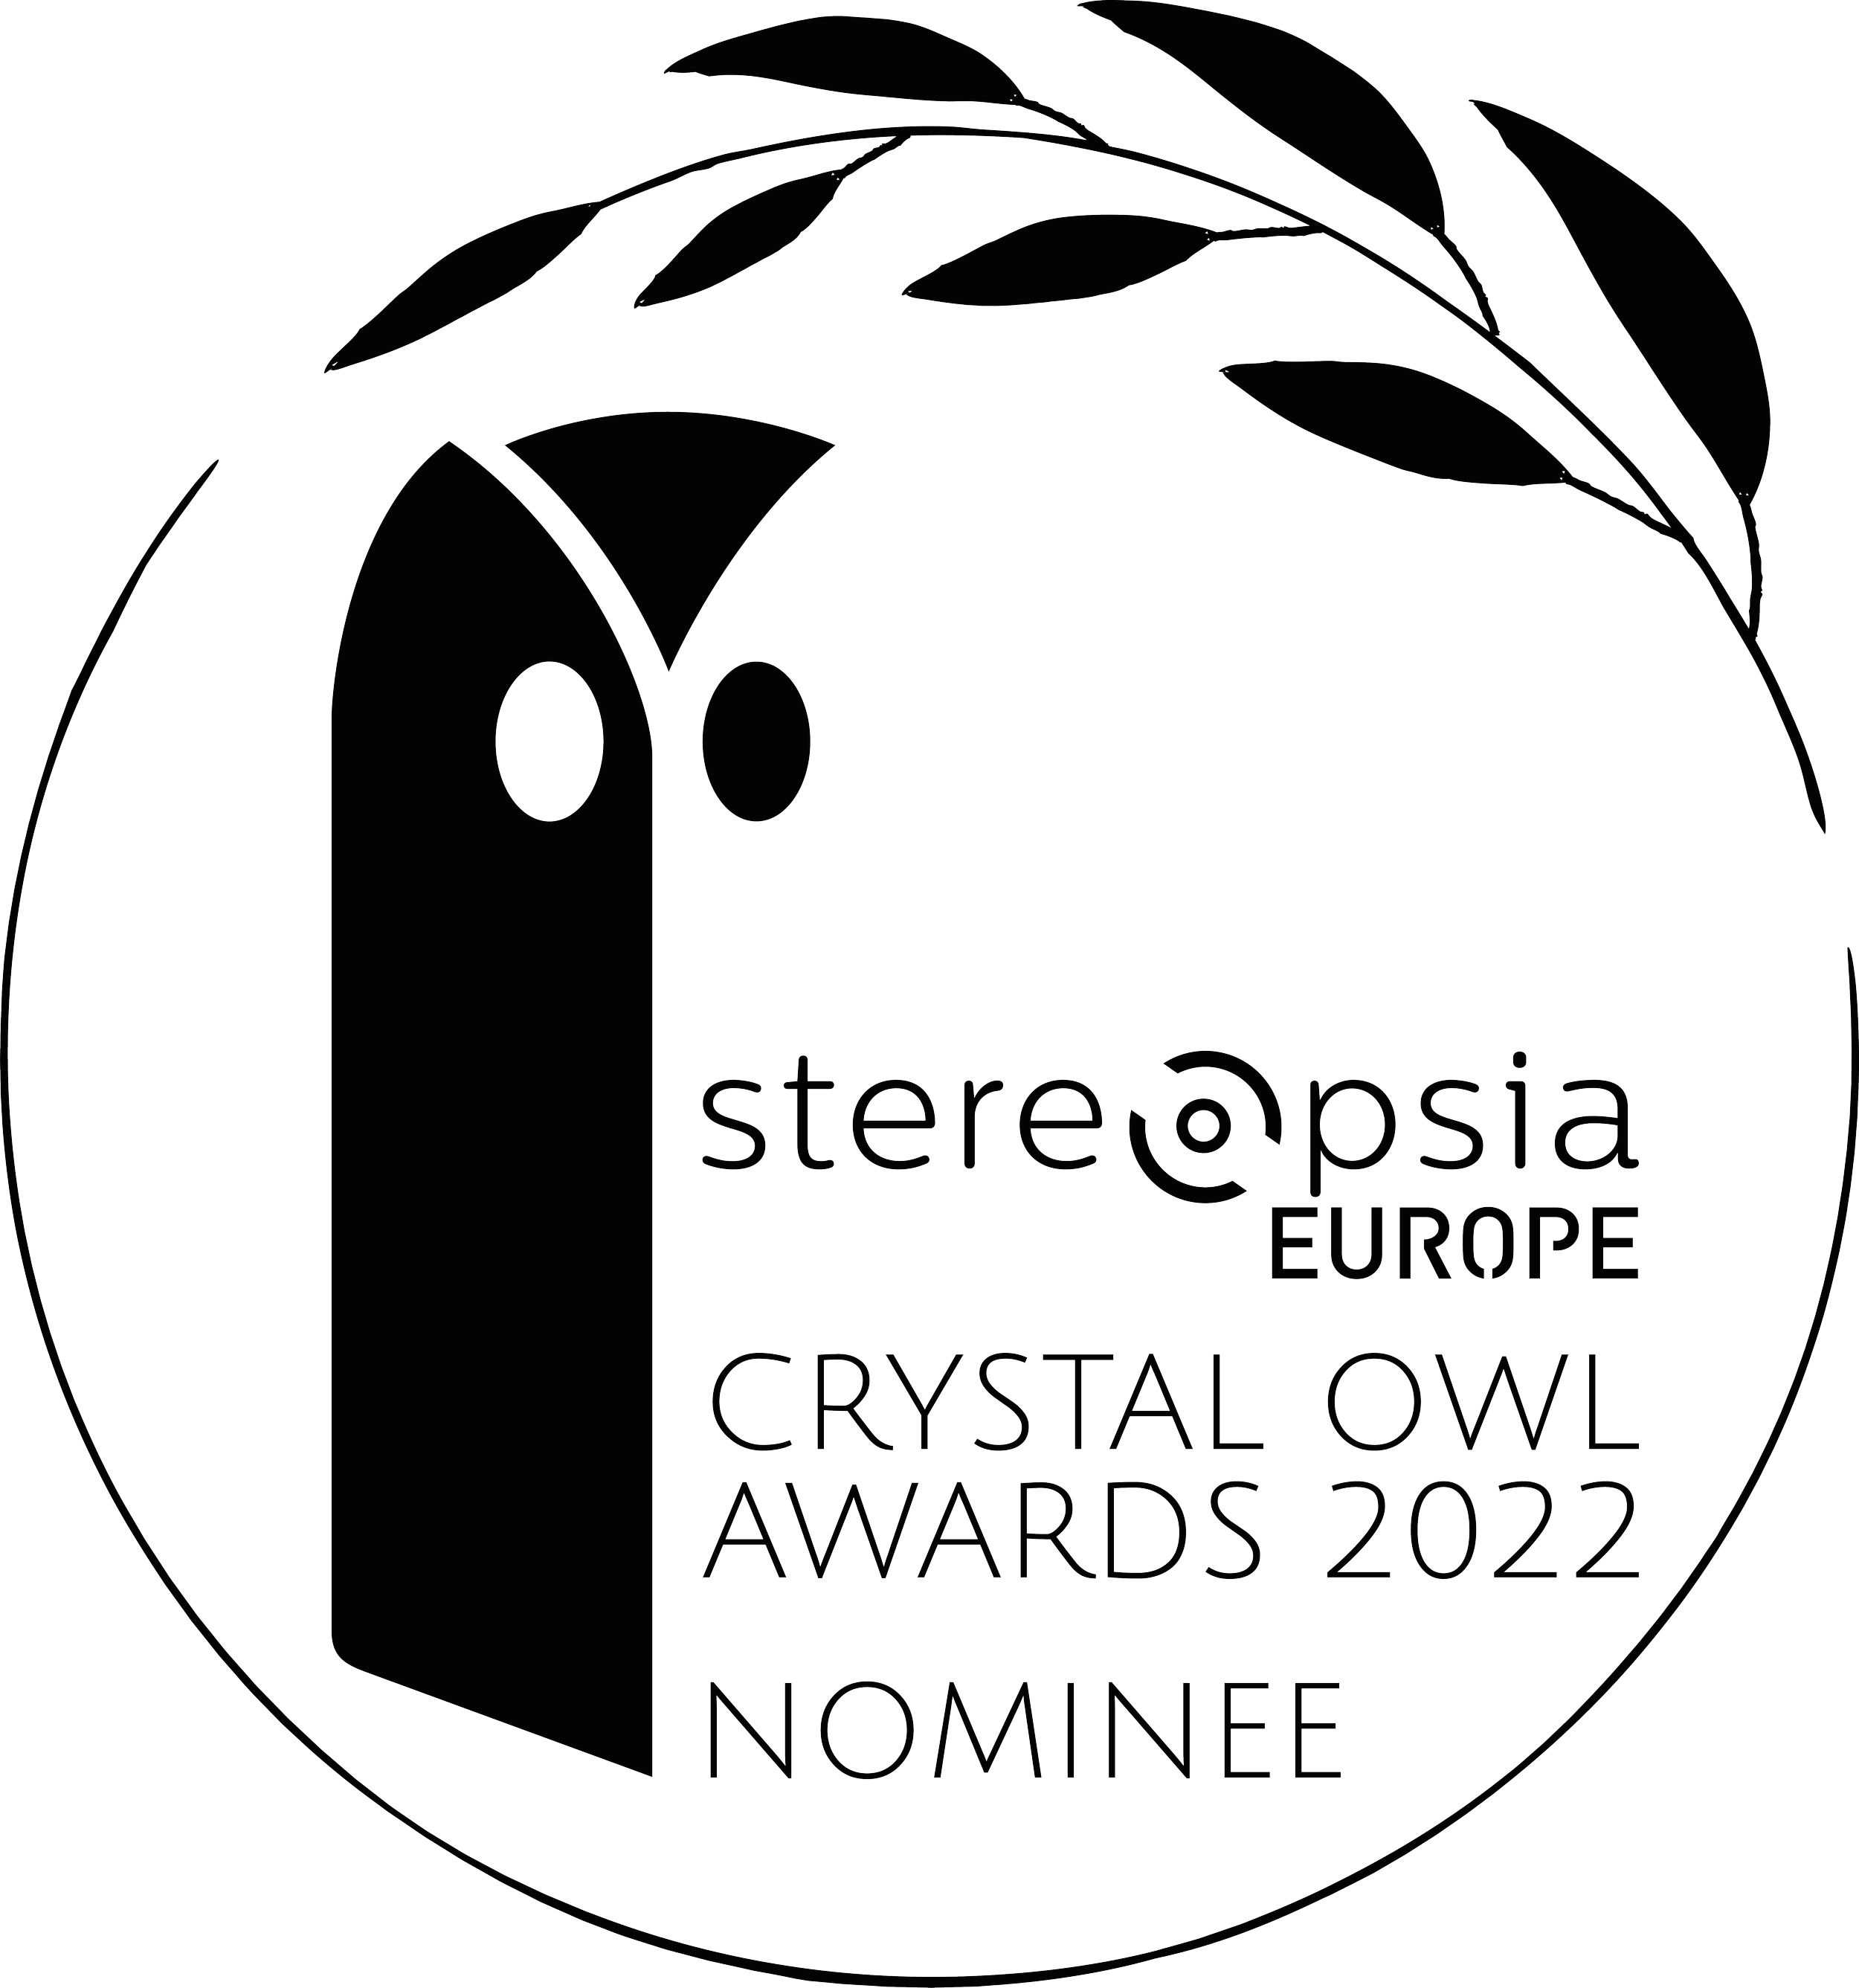 Crystal Owl Awards_Nominee_Black.png